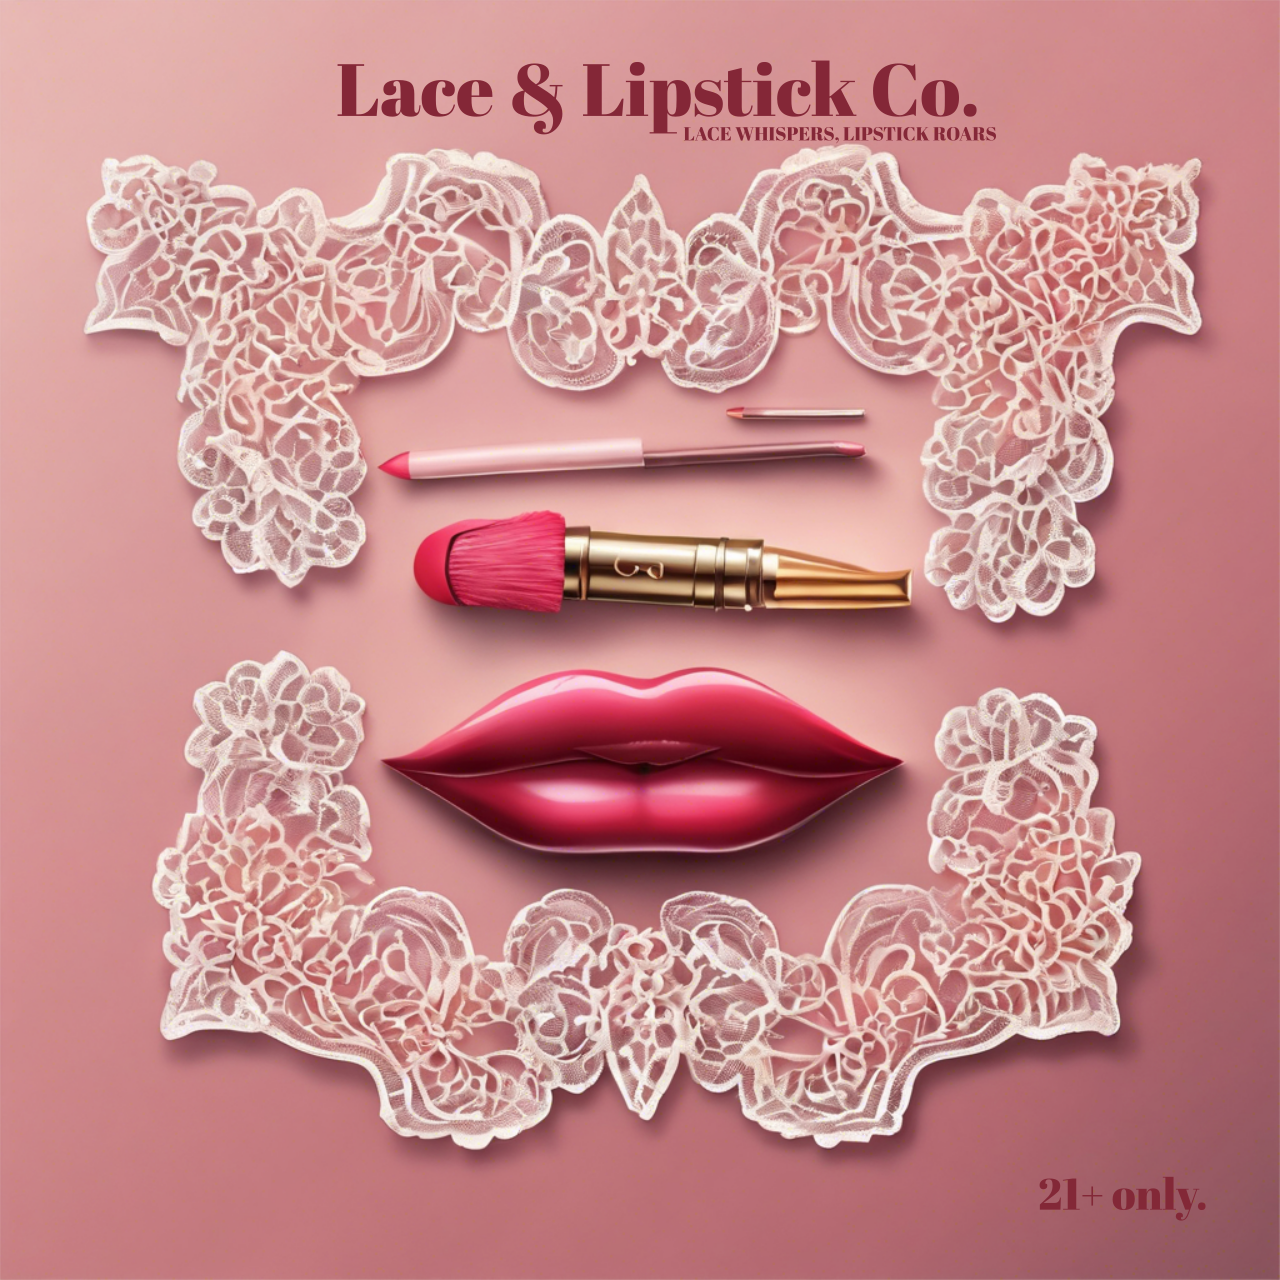 Lace & Lipstick Co.